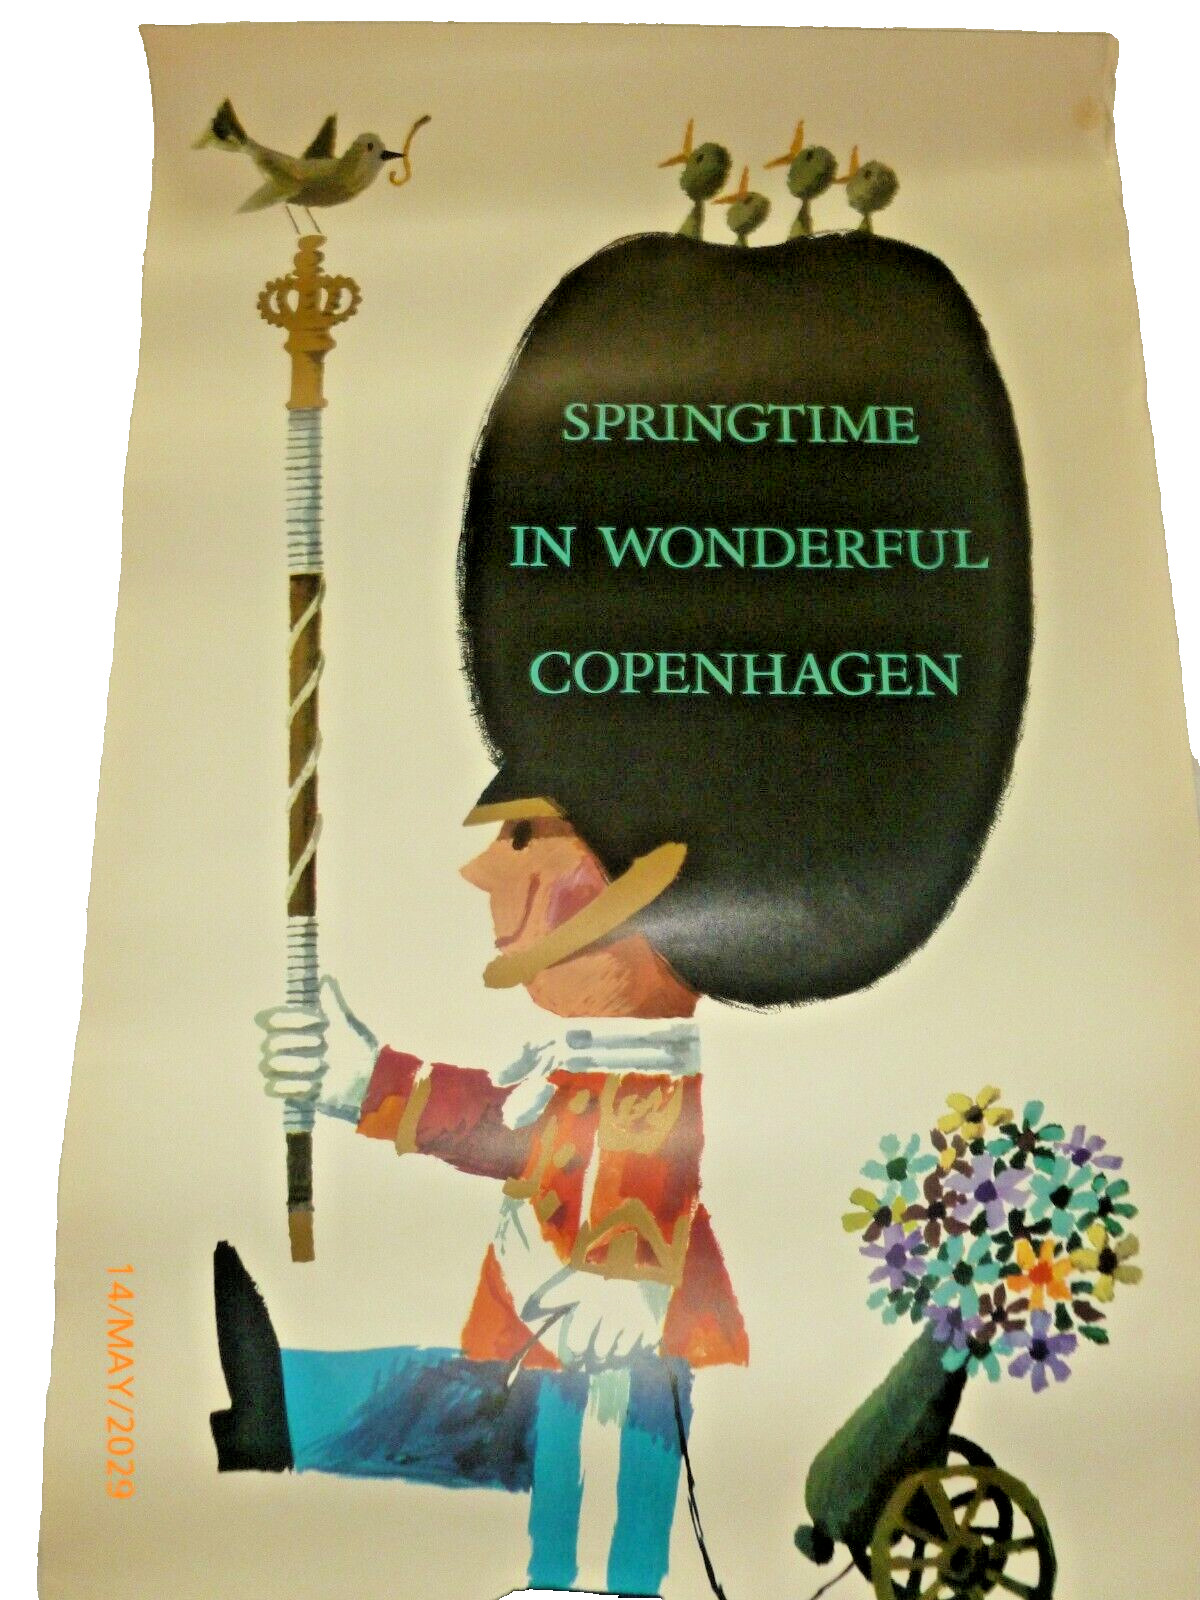 Vintage Original SPRINGTIME WONDERFUL COPENHAGEN ANTONI 1961 Poster ICONIC Rare